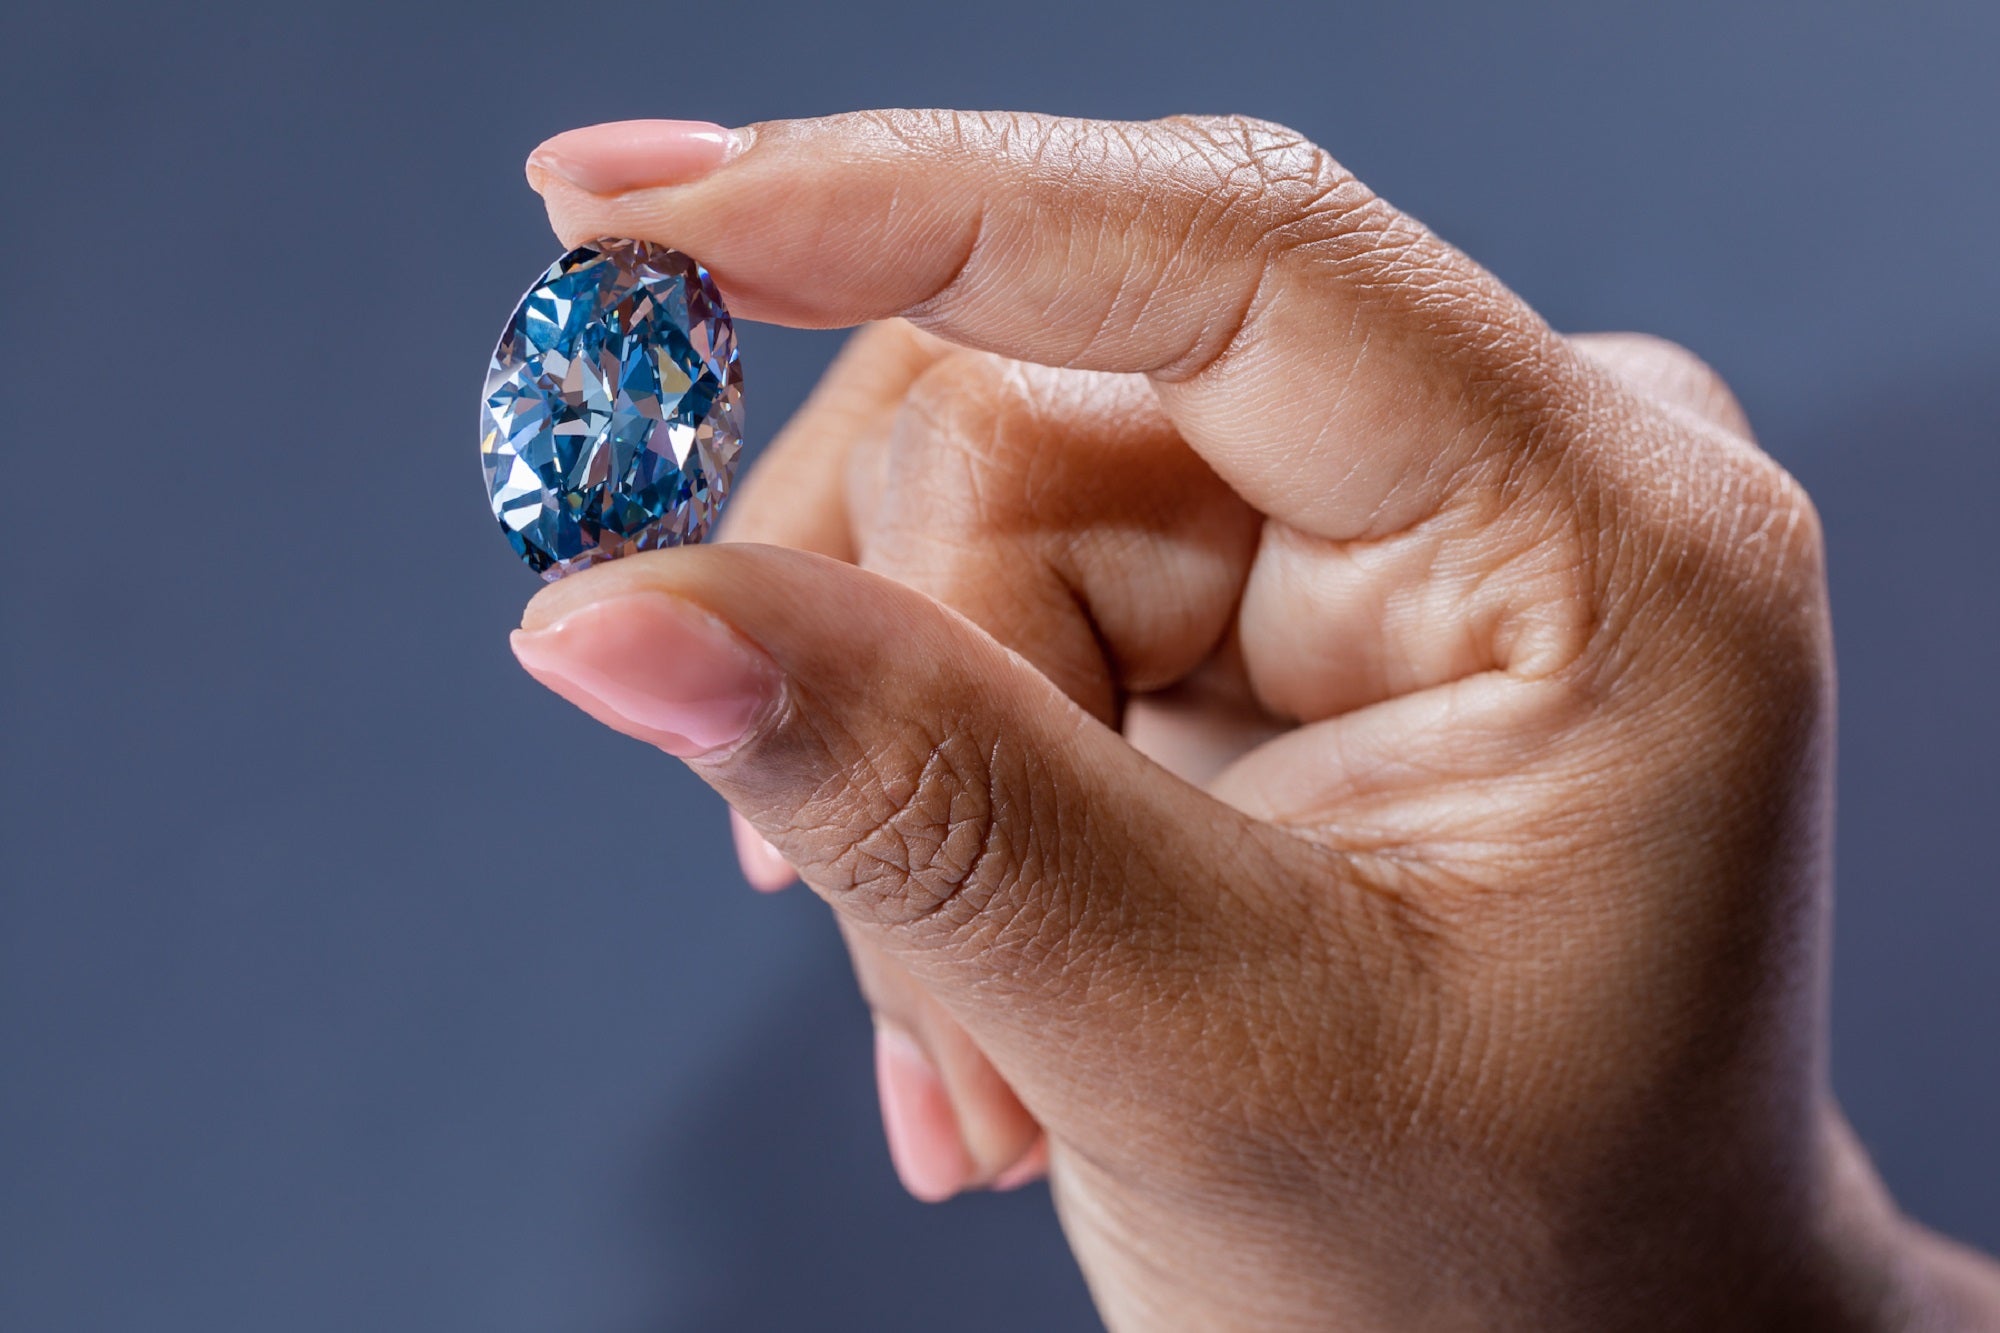 20.46-carat blue diamond on display in New York City | Popular Science